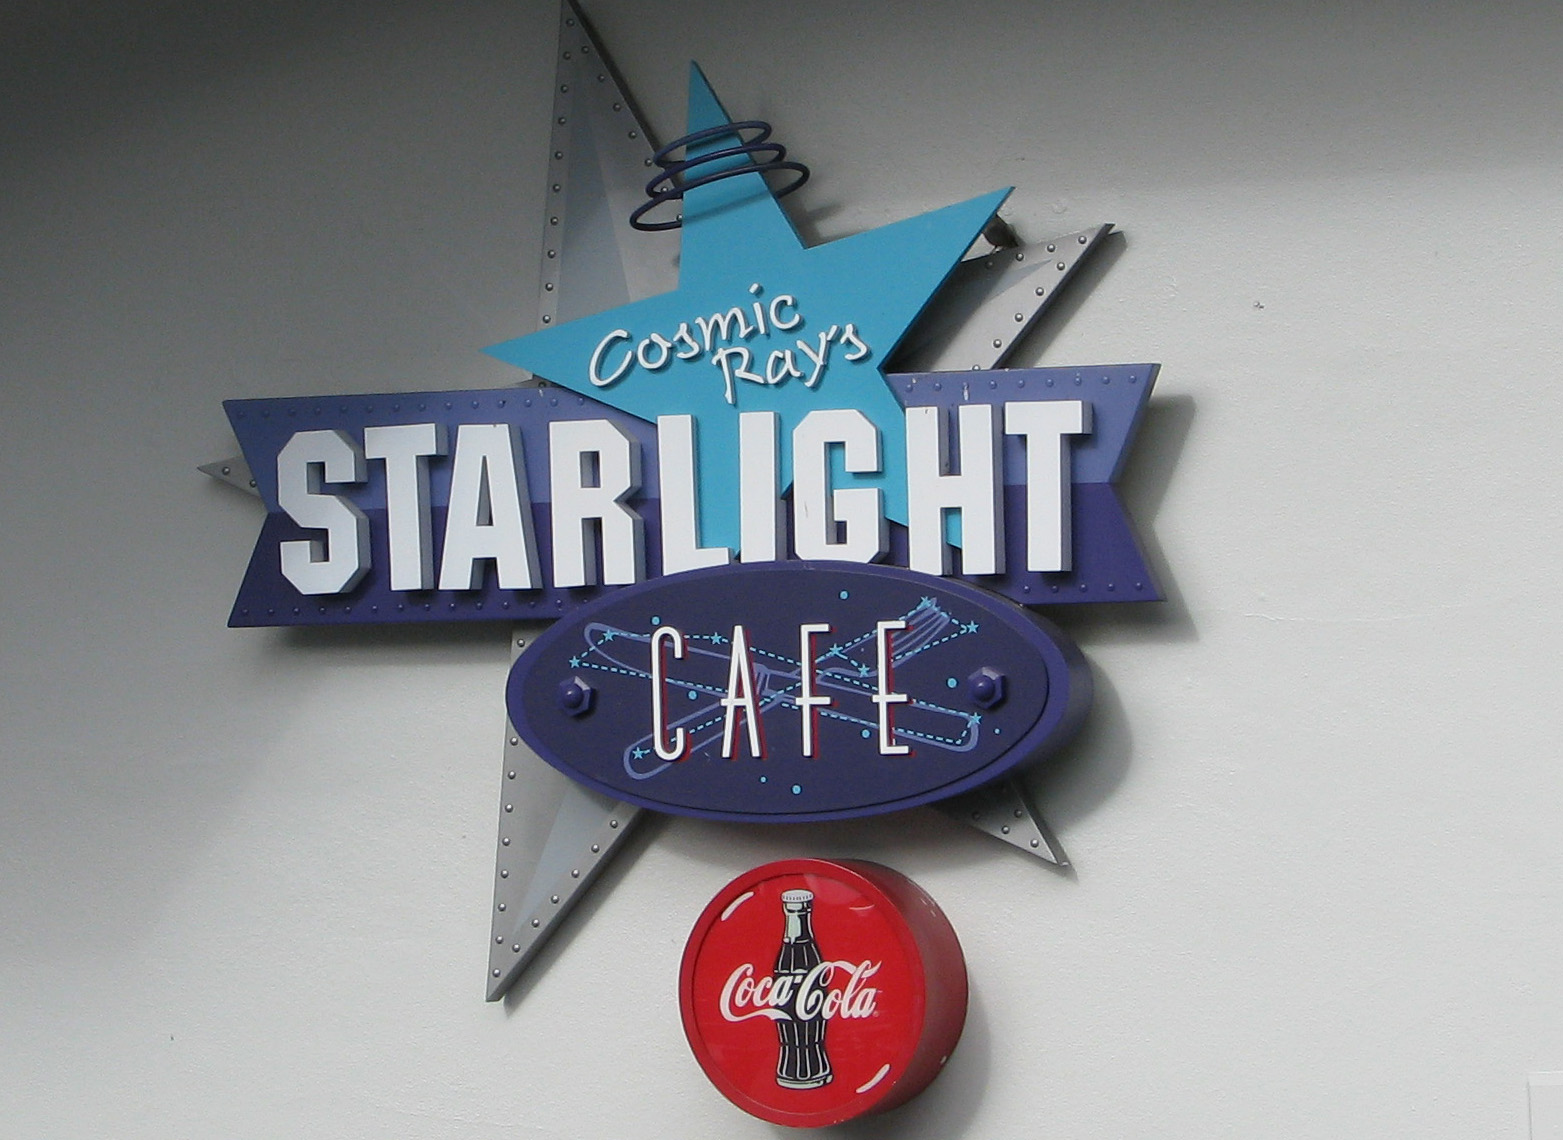 Cosmic Rays Starlight Cafe.jpg